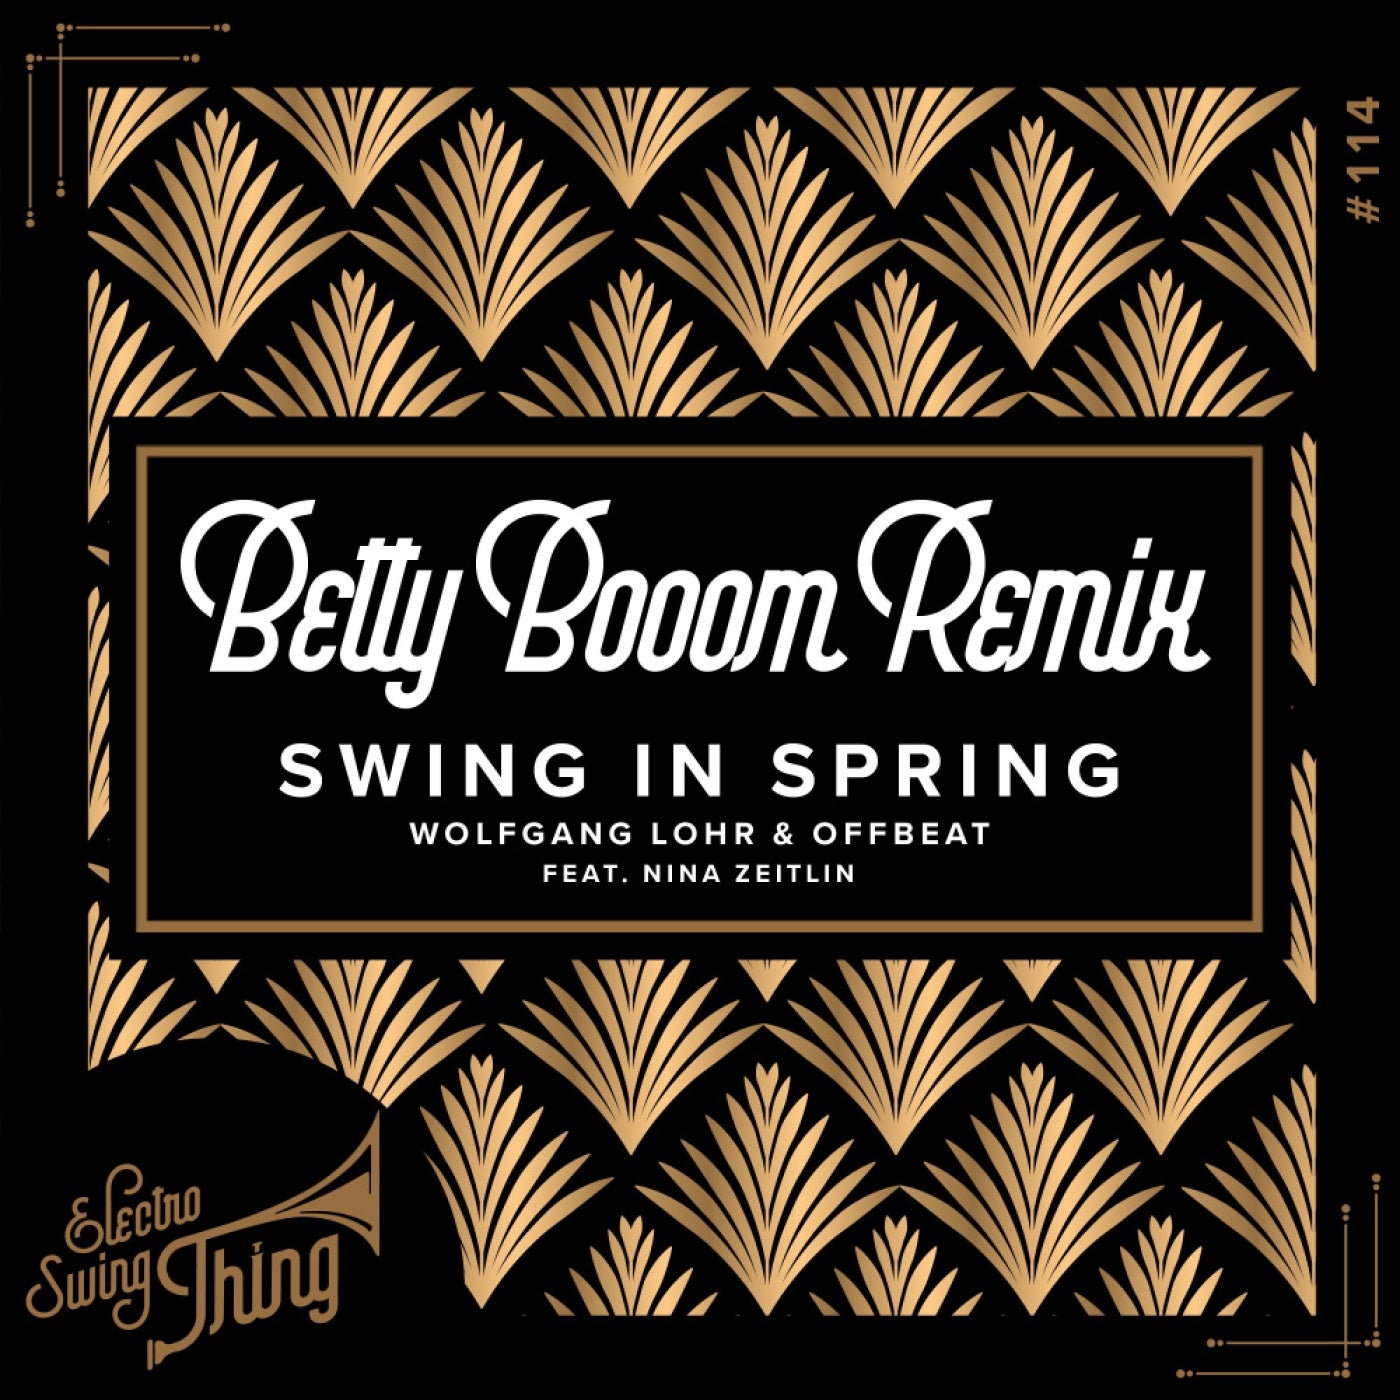 Swing in Spring (Betty Booom Remix)